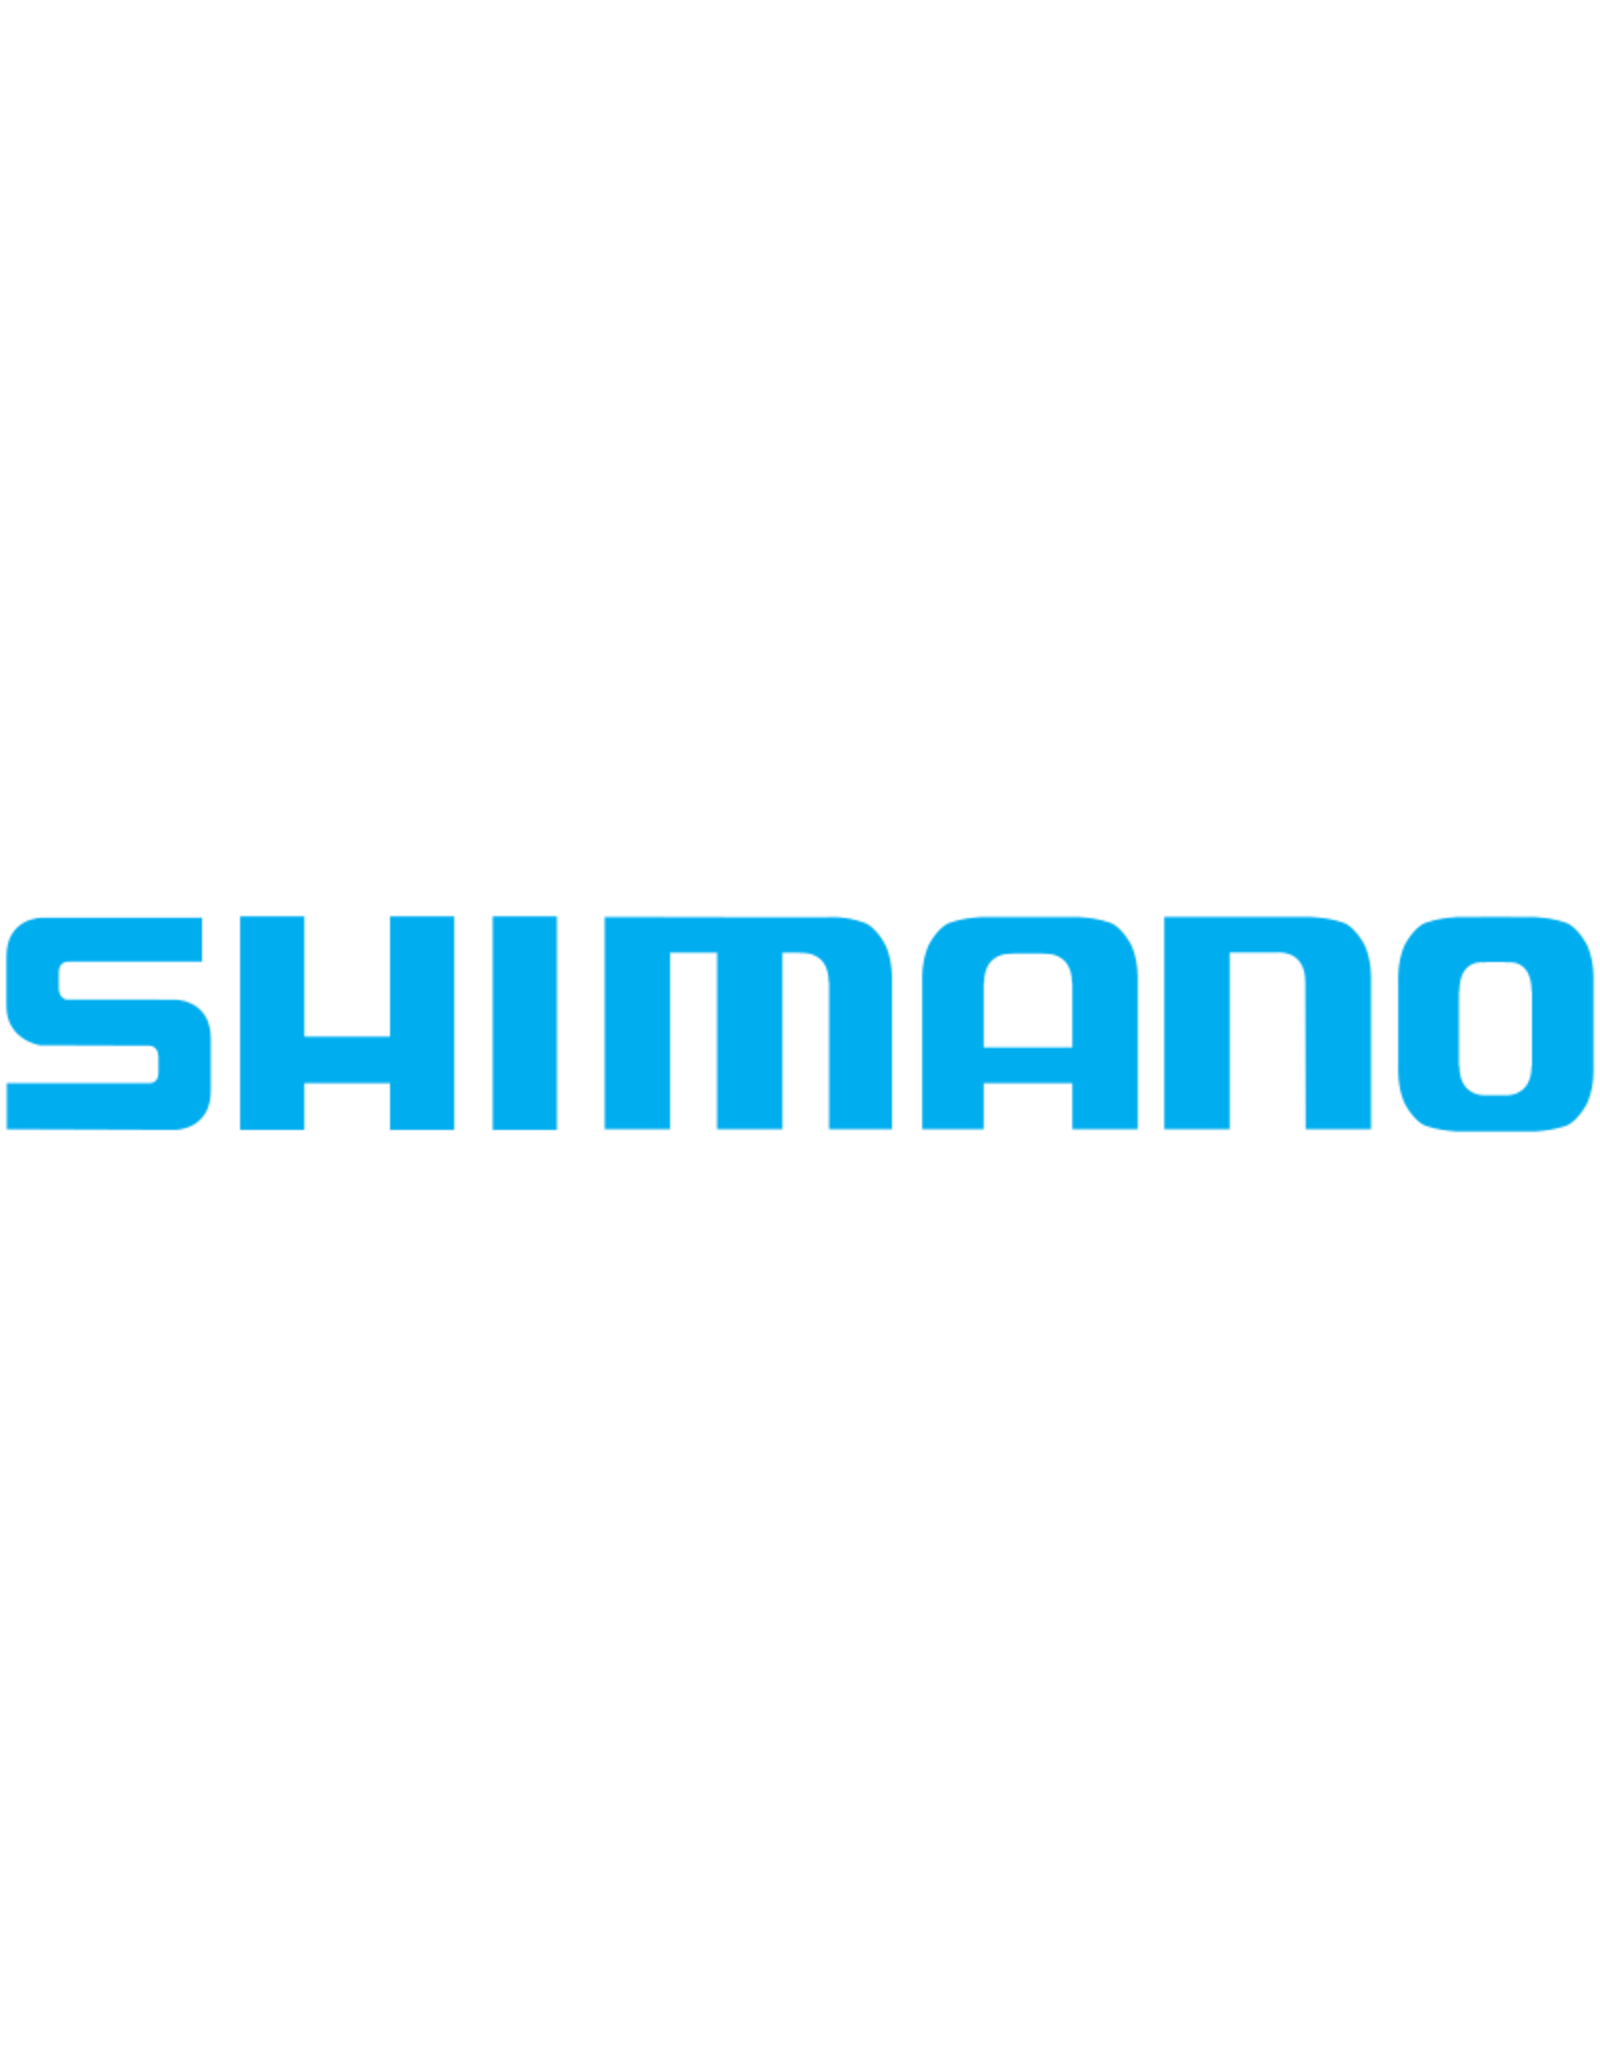 Shimano TT 0357  PRESSURE SPRING